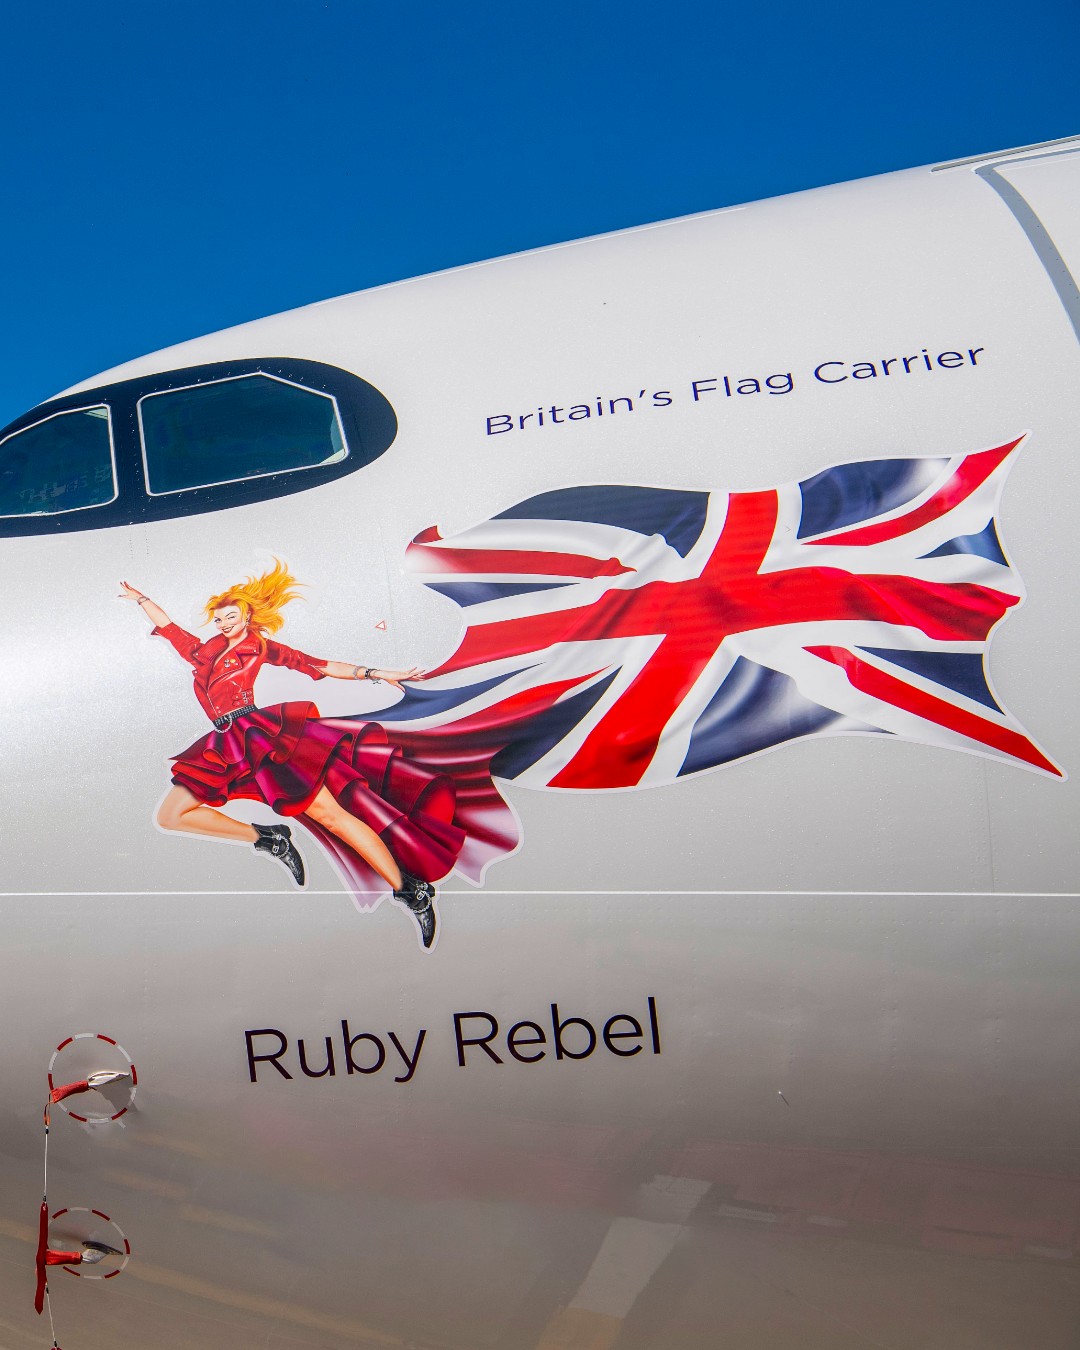 Virgin Atlantic Names Latest Plane After Sir Richard Branson